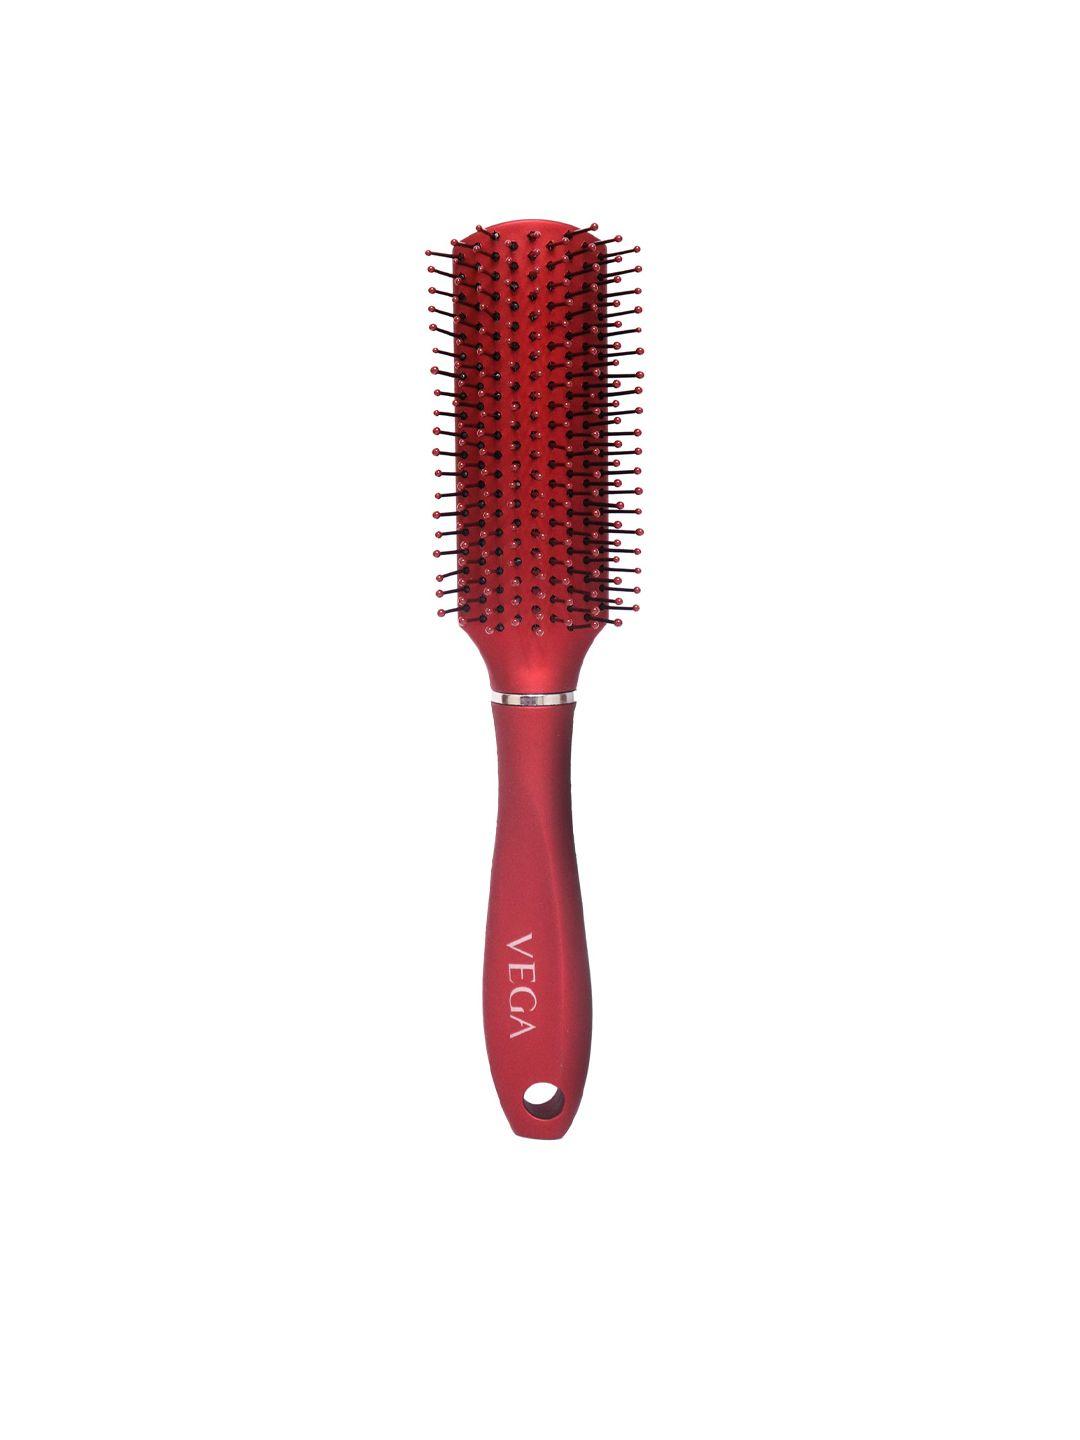 vega unisex red flat paddle hair brush